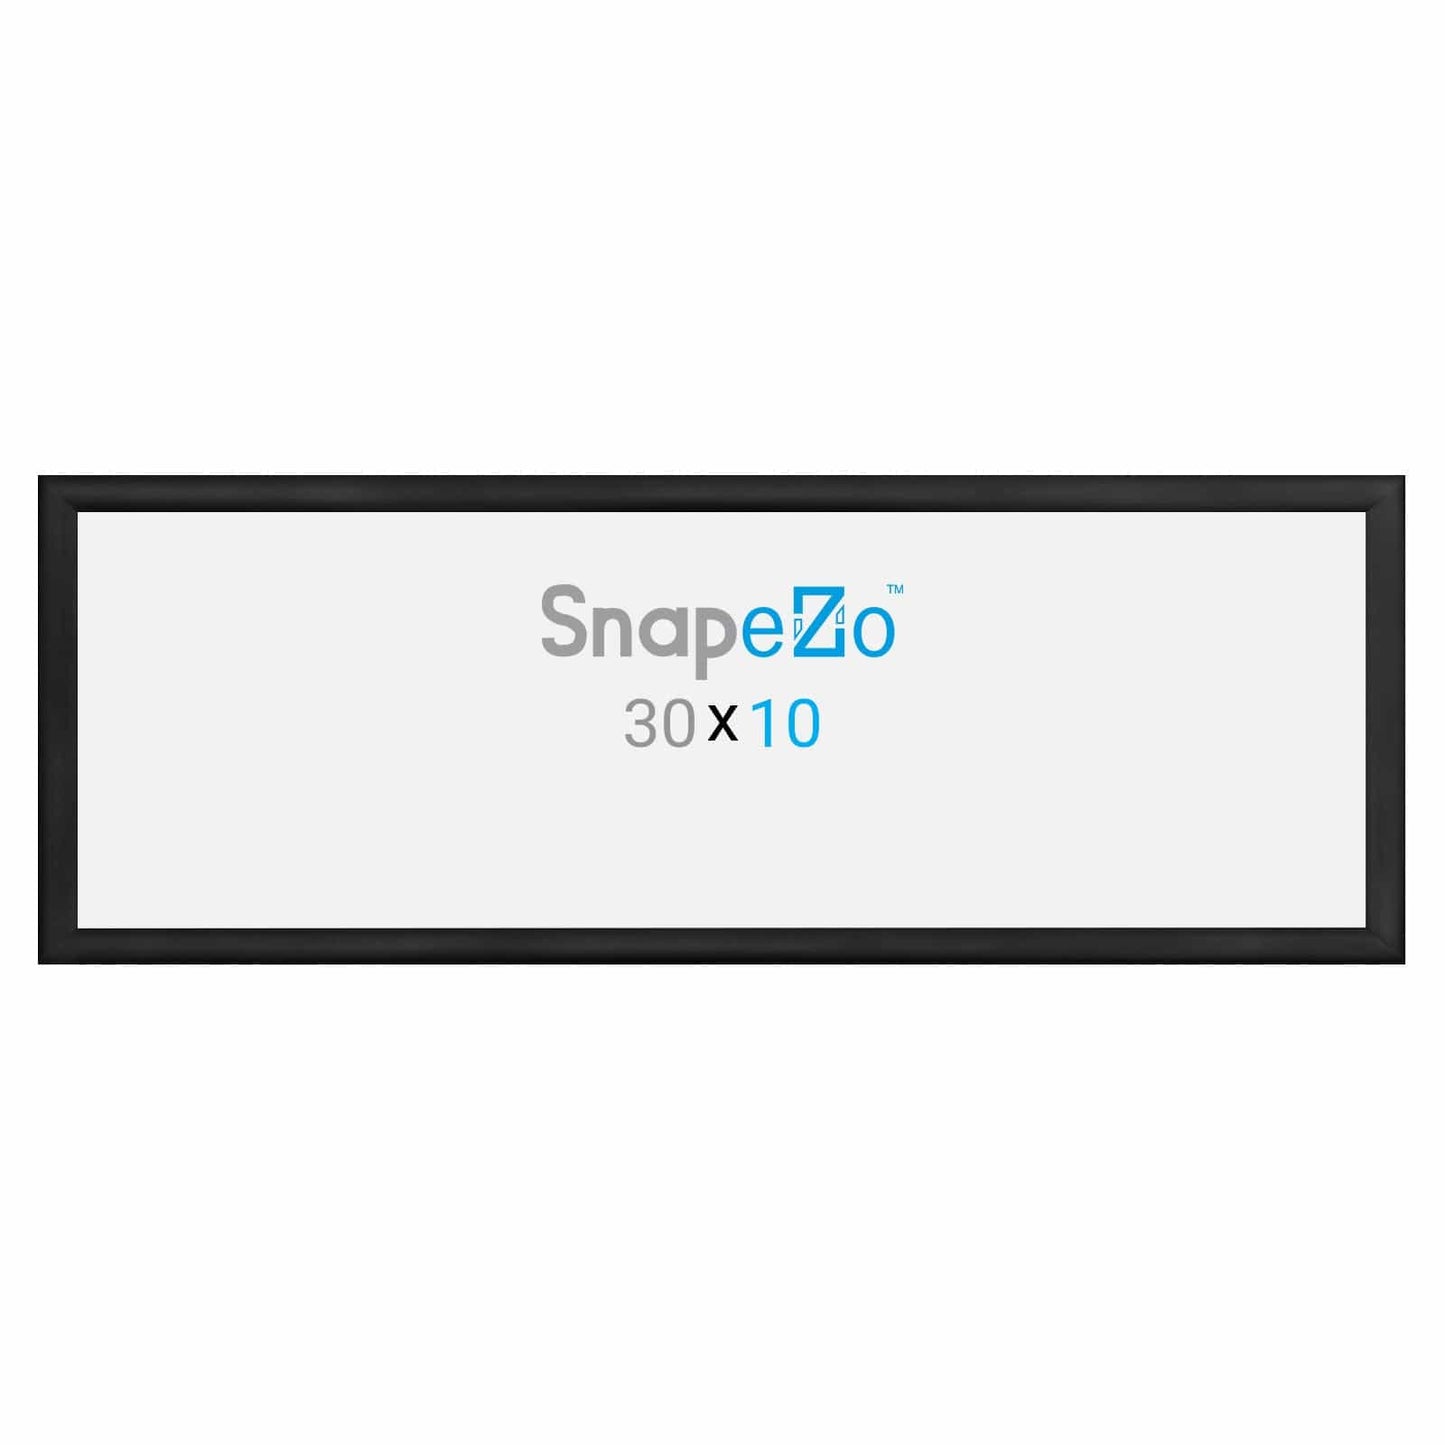 10x30 Black SnapeZo® Snap Frame - 1.2" Profile - Snap Frames Direct